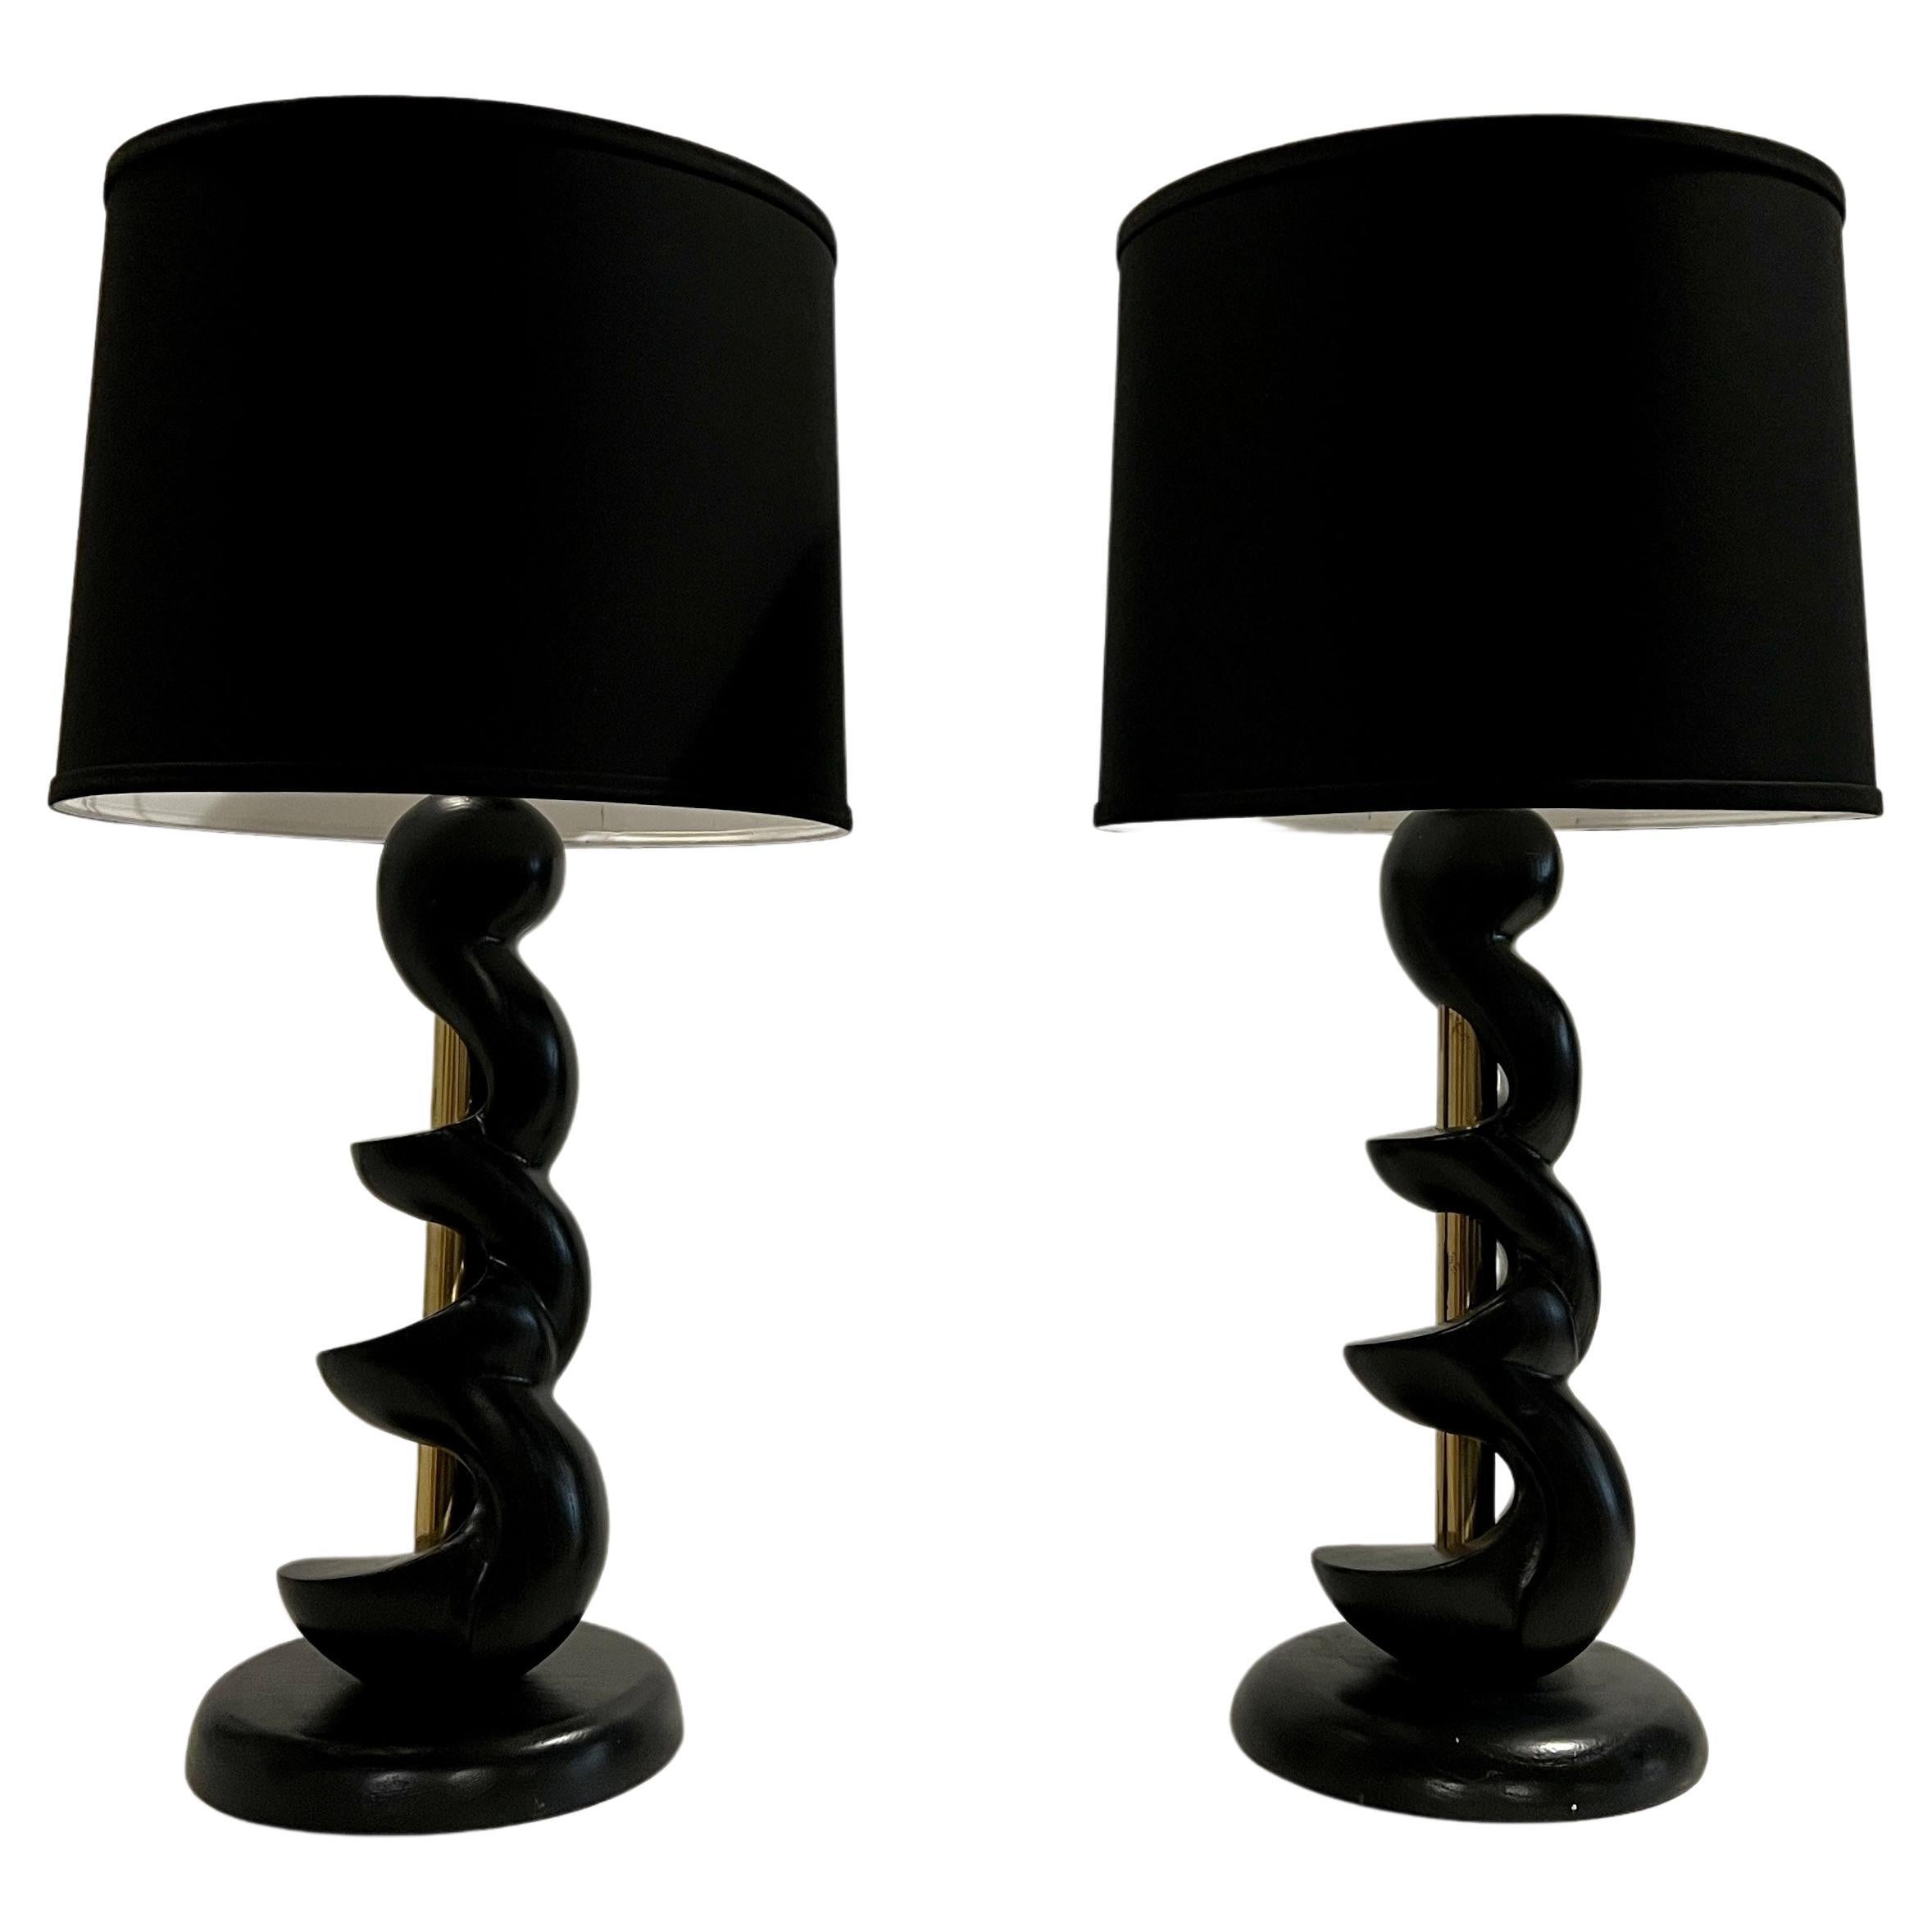 Skulpturale Spiralholzlampen von Light House Light and Shade Co. im Angebot